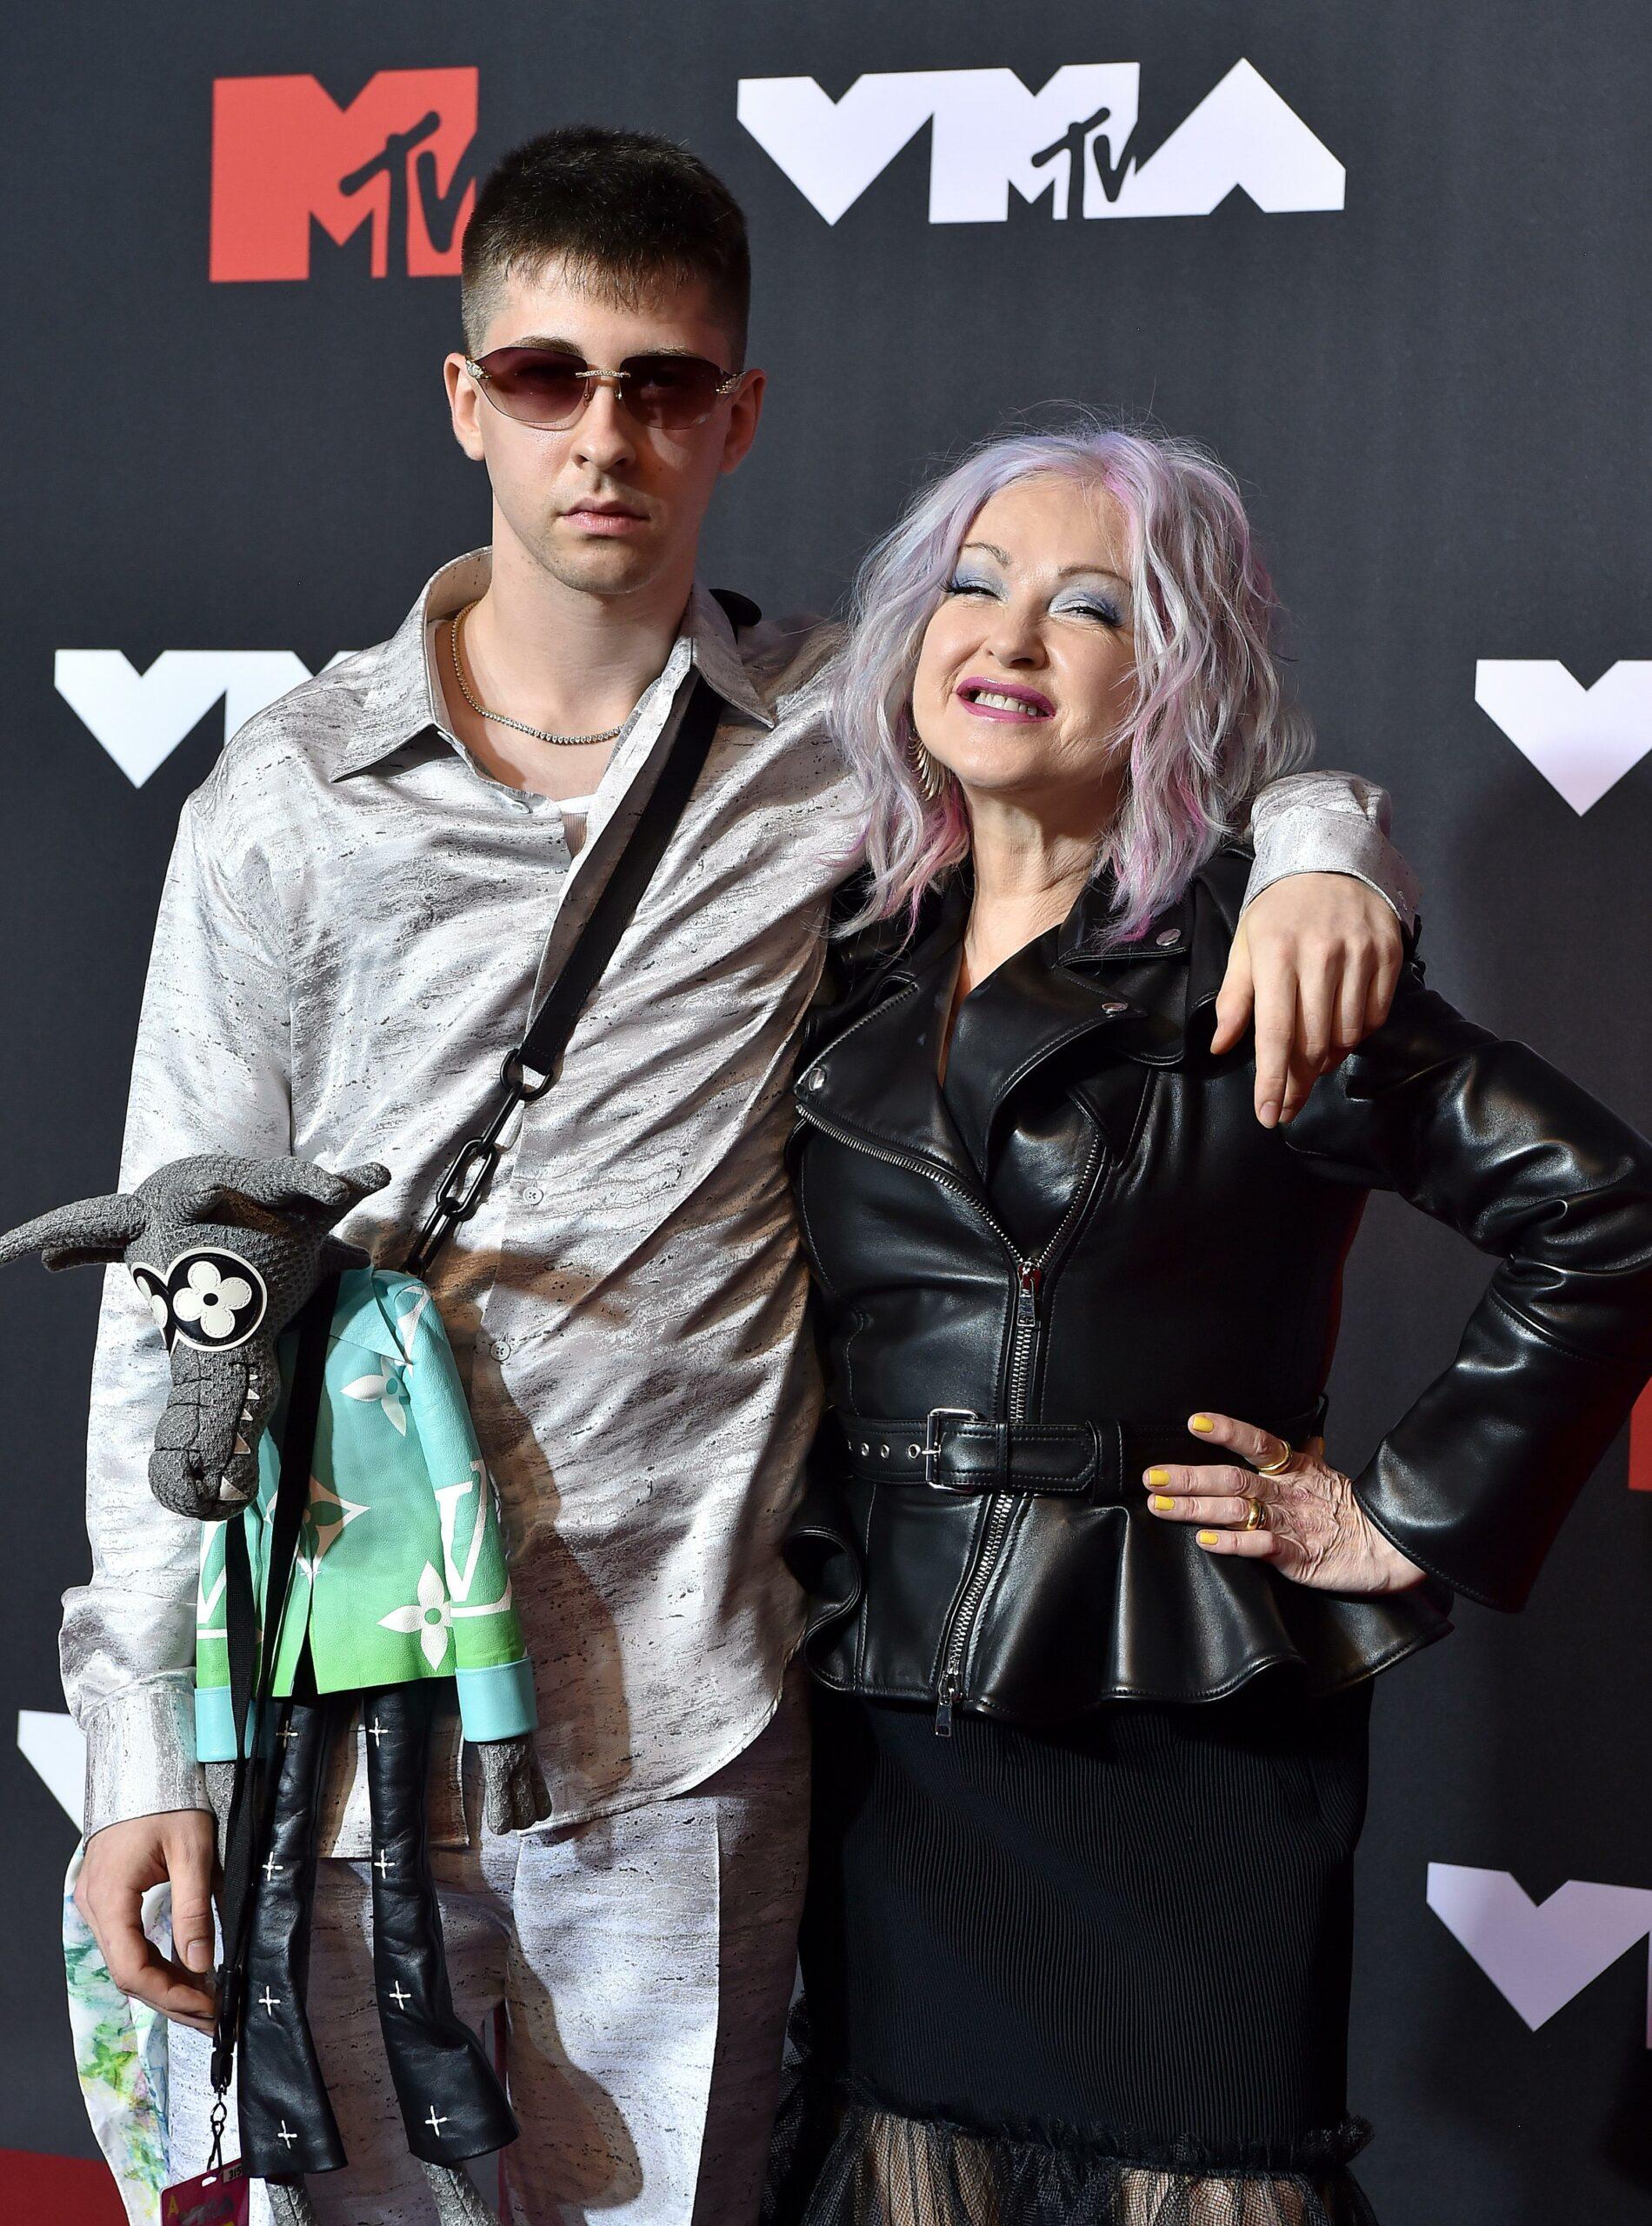 2021 MTV Video Music Awards. Barclays Center, New York, New York. EVENT September 12, 2021. 12 Sep 2021 Pictured: Dex Lauper,Cyndi Lauper.